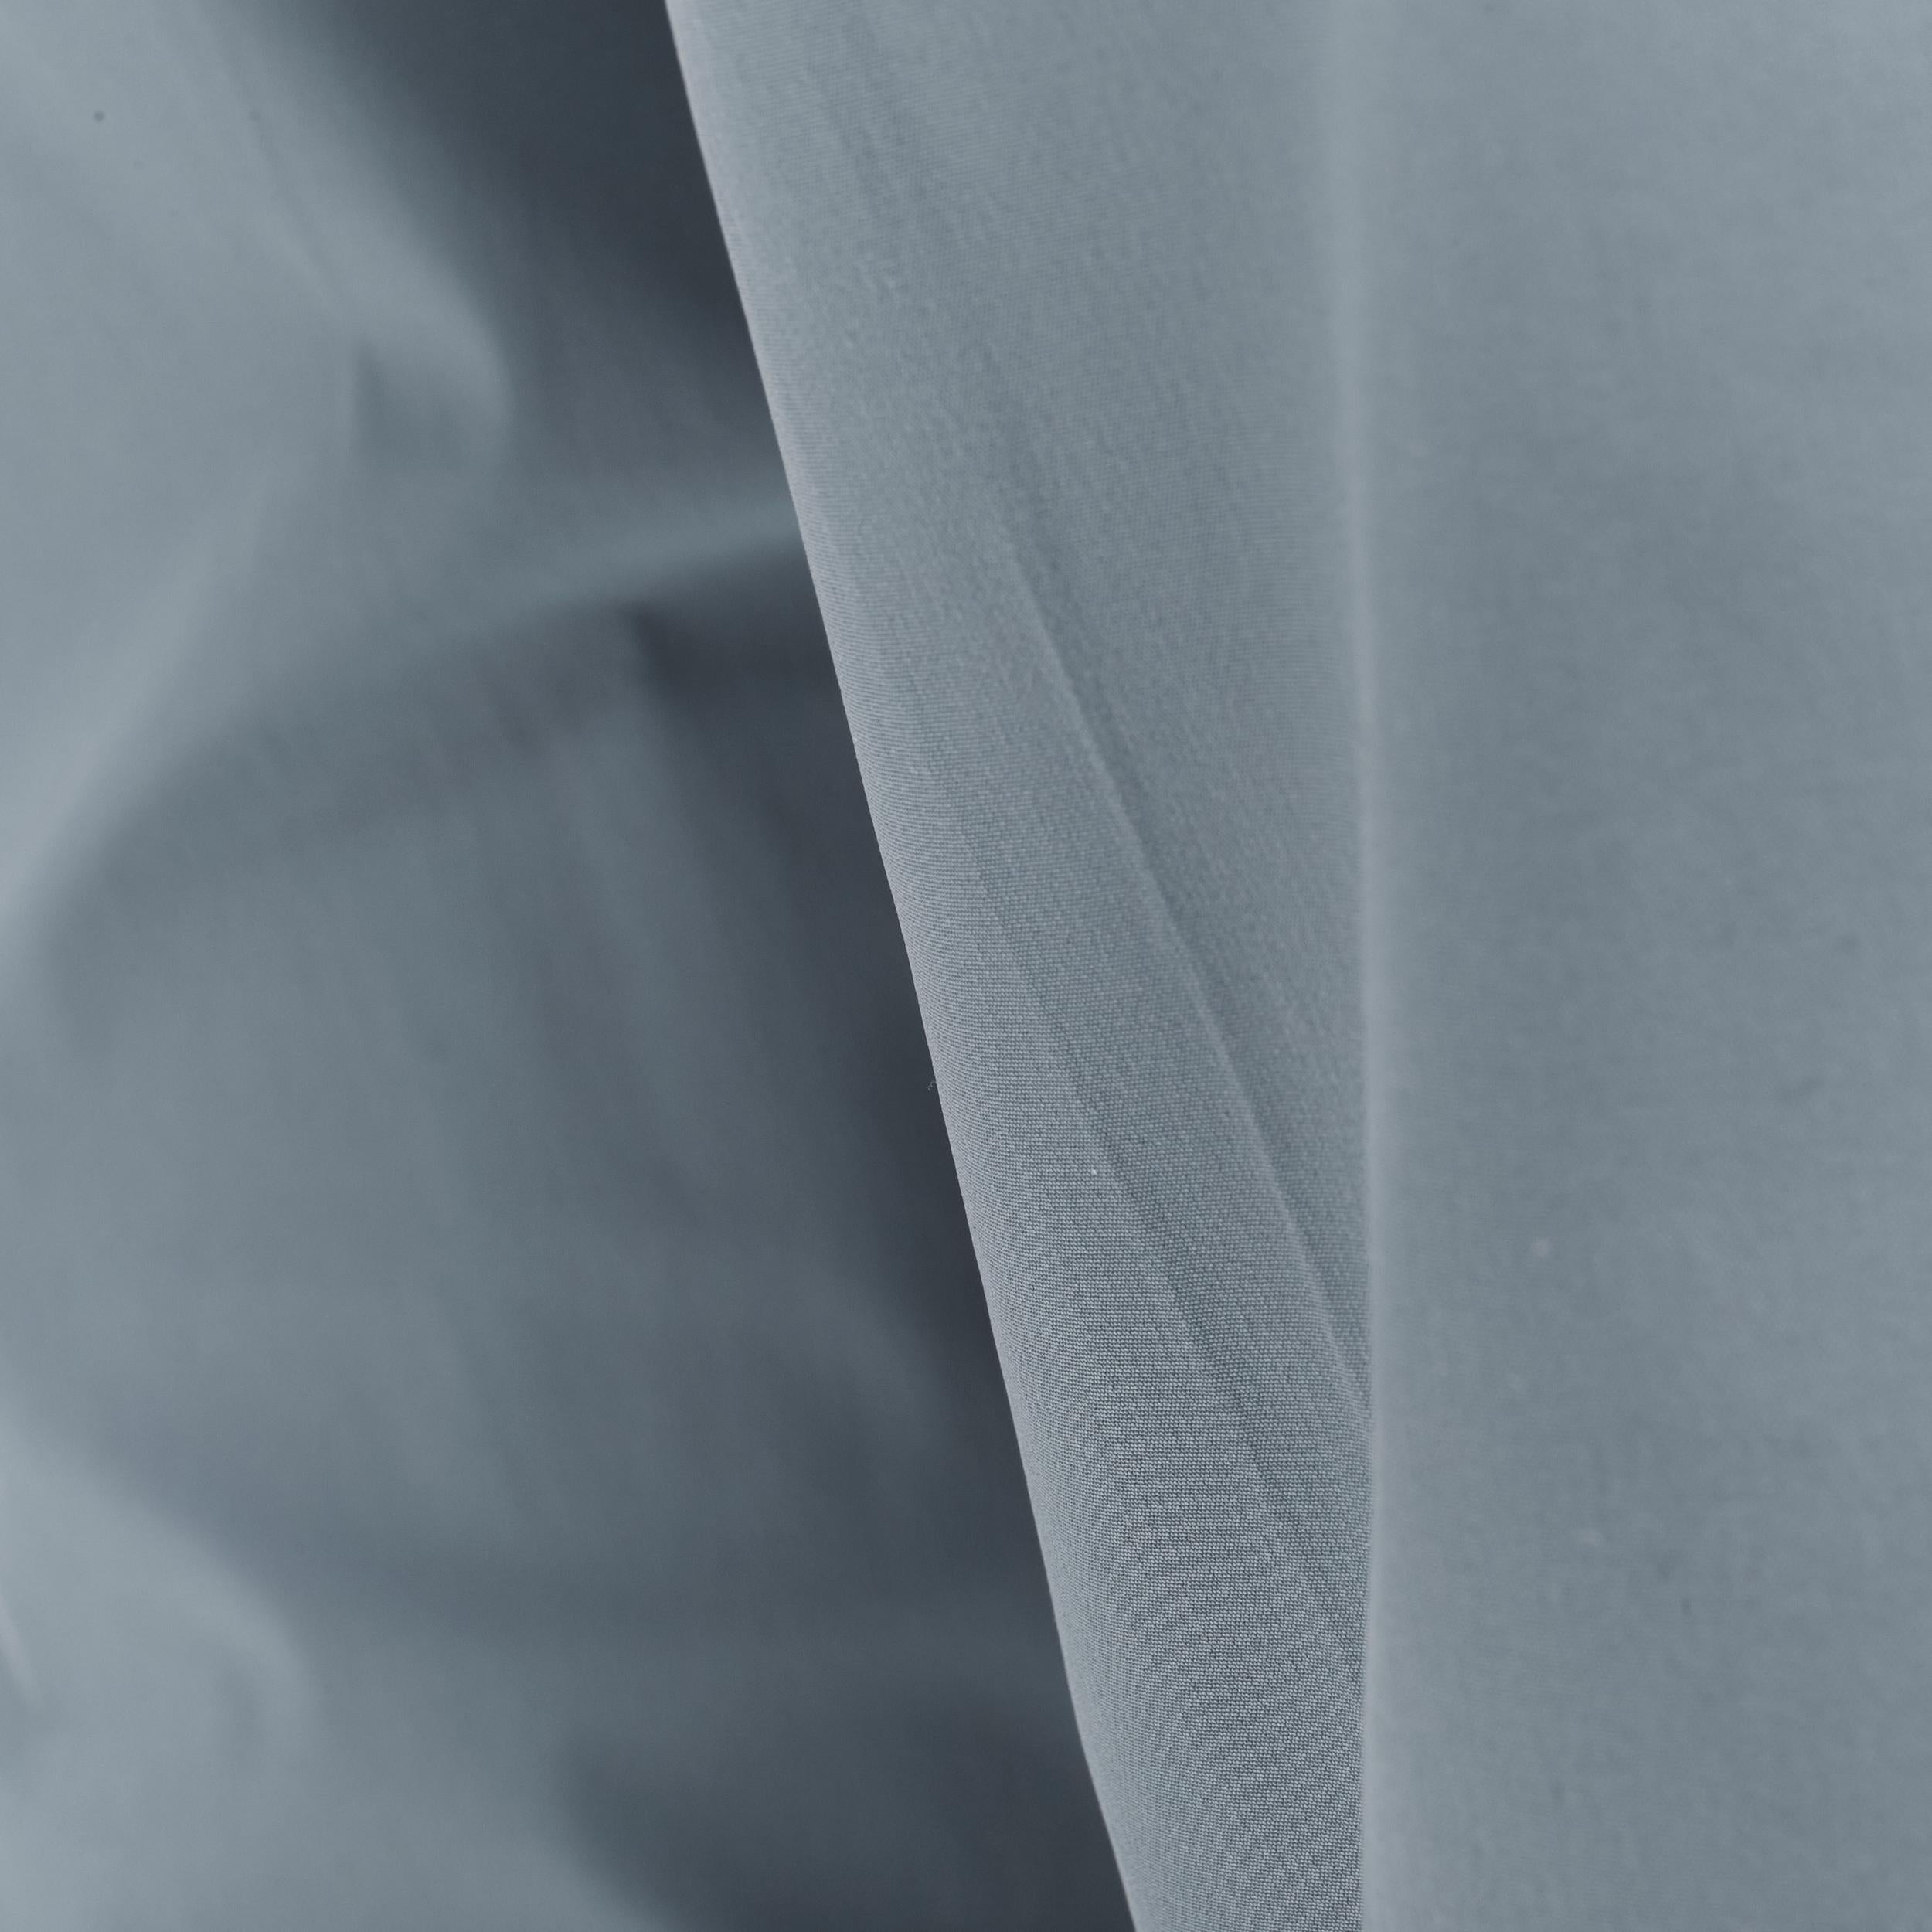 PRADA 2017 teal blue polyester blend logo tag back pocket trousers pants IT48 M 3